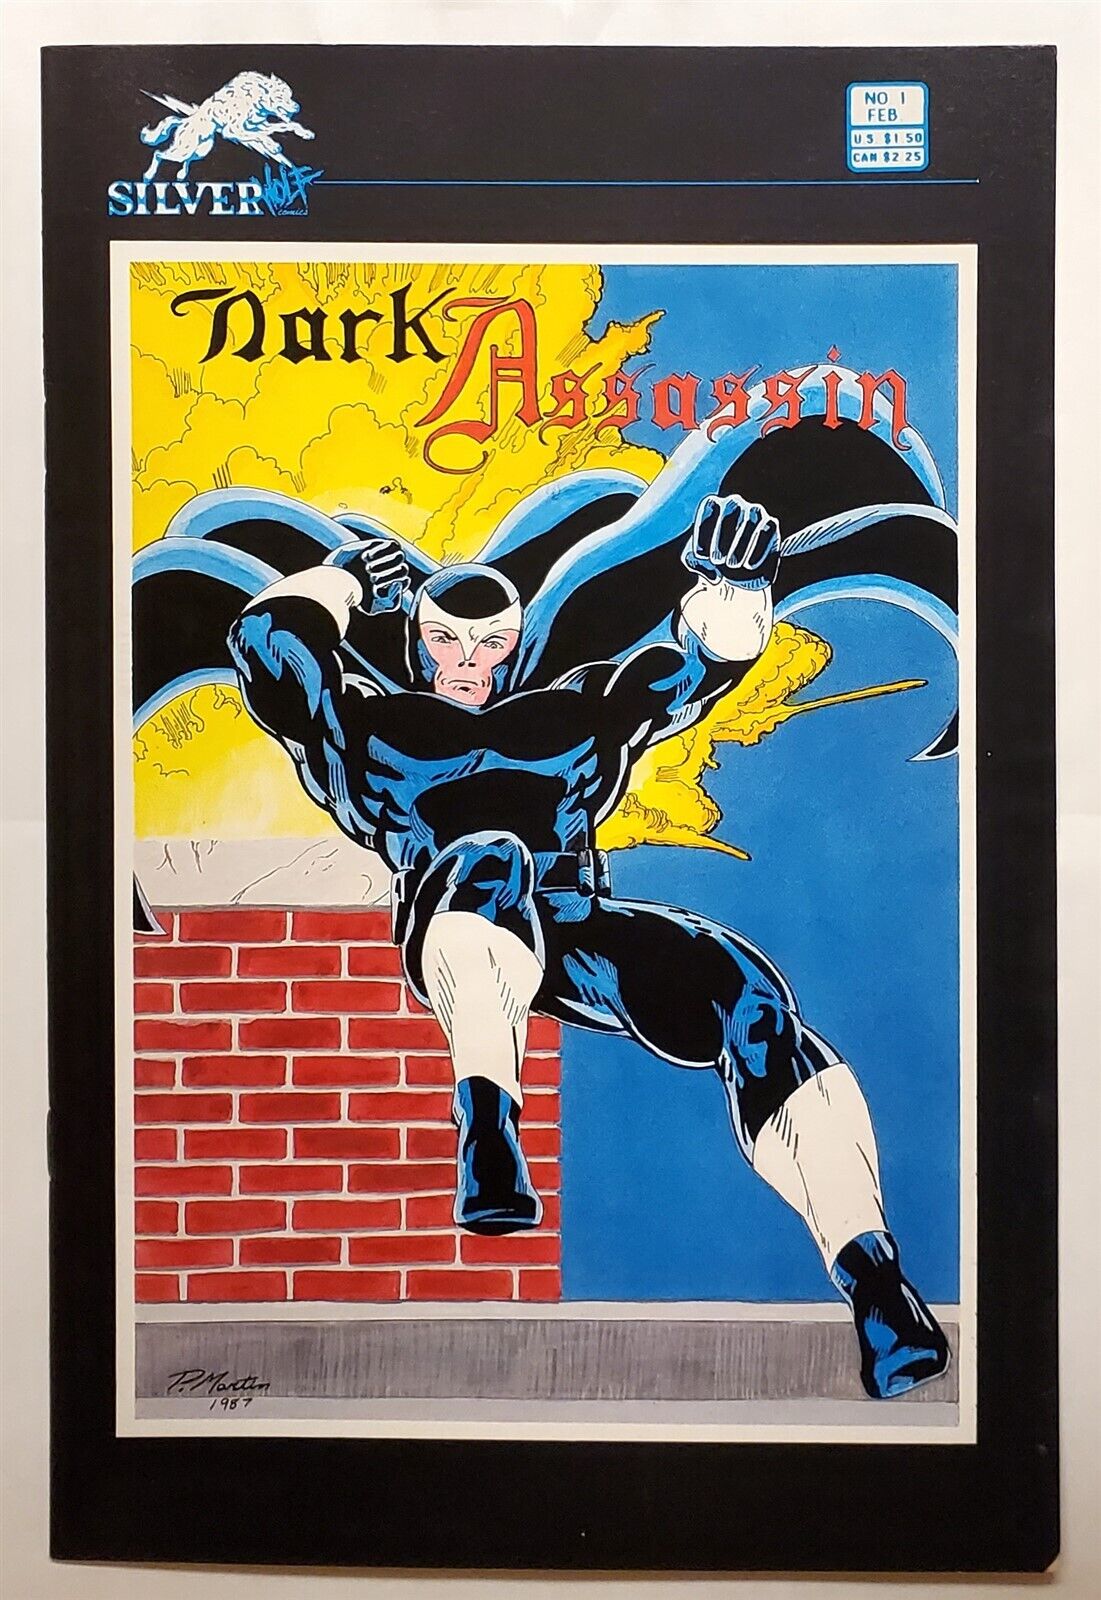 Dark Assassin #1 (Feb 1987, Silverwolf) 4.0 VG 